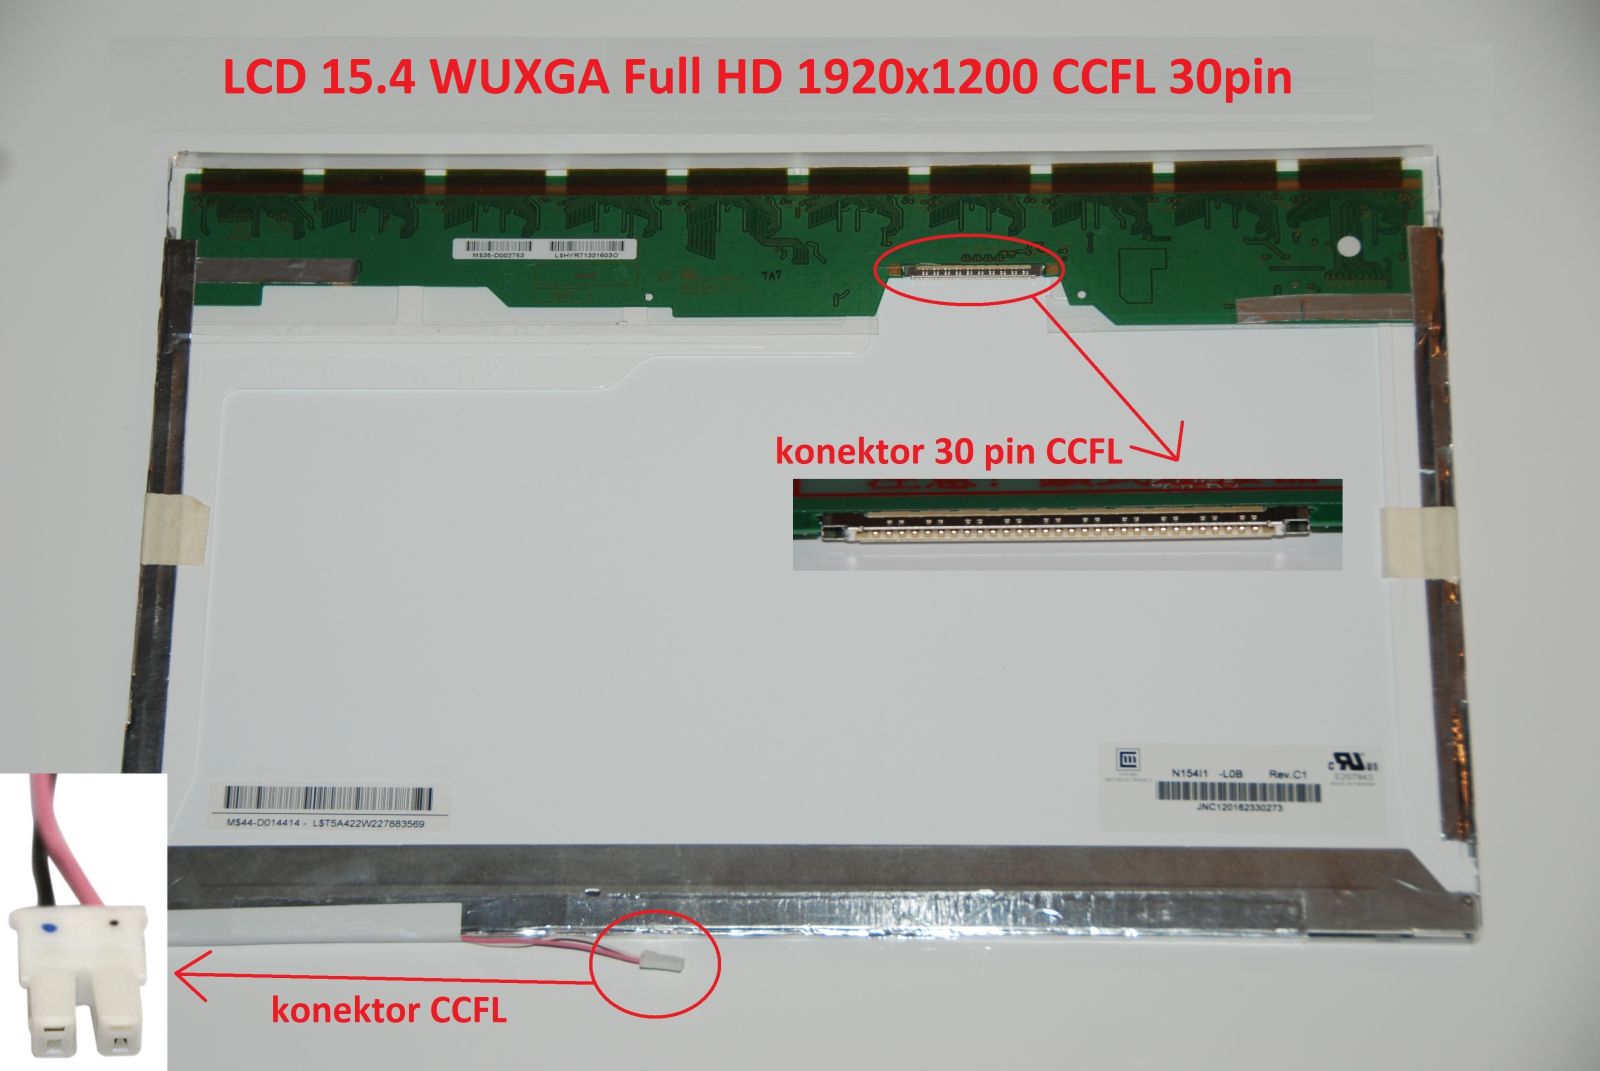 LCD 15.4" 1920x1200 WUXGA Full HD CCFL 30pin